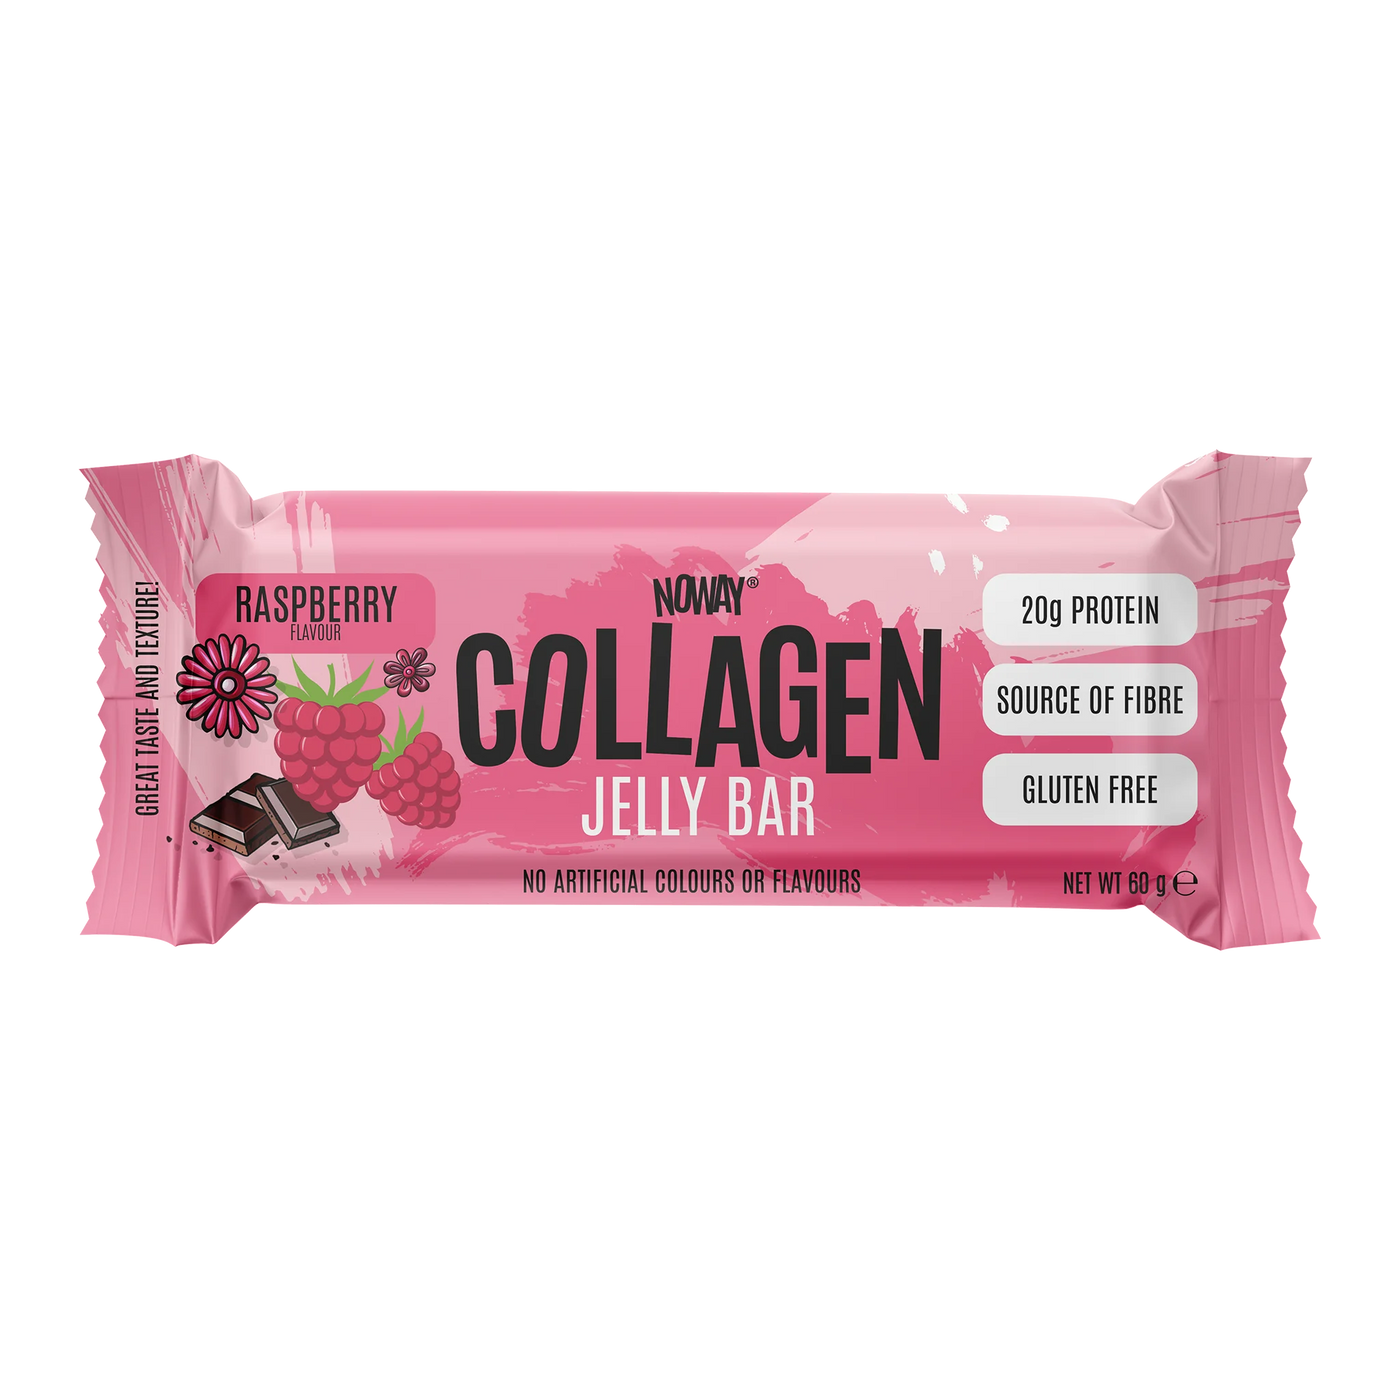 NOWAY Collagen Jelly Bar Box of 12 - Raspberry